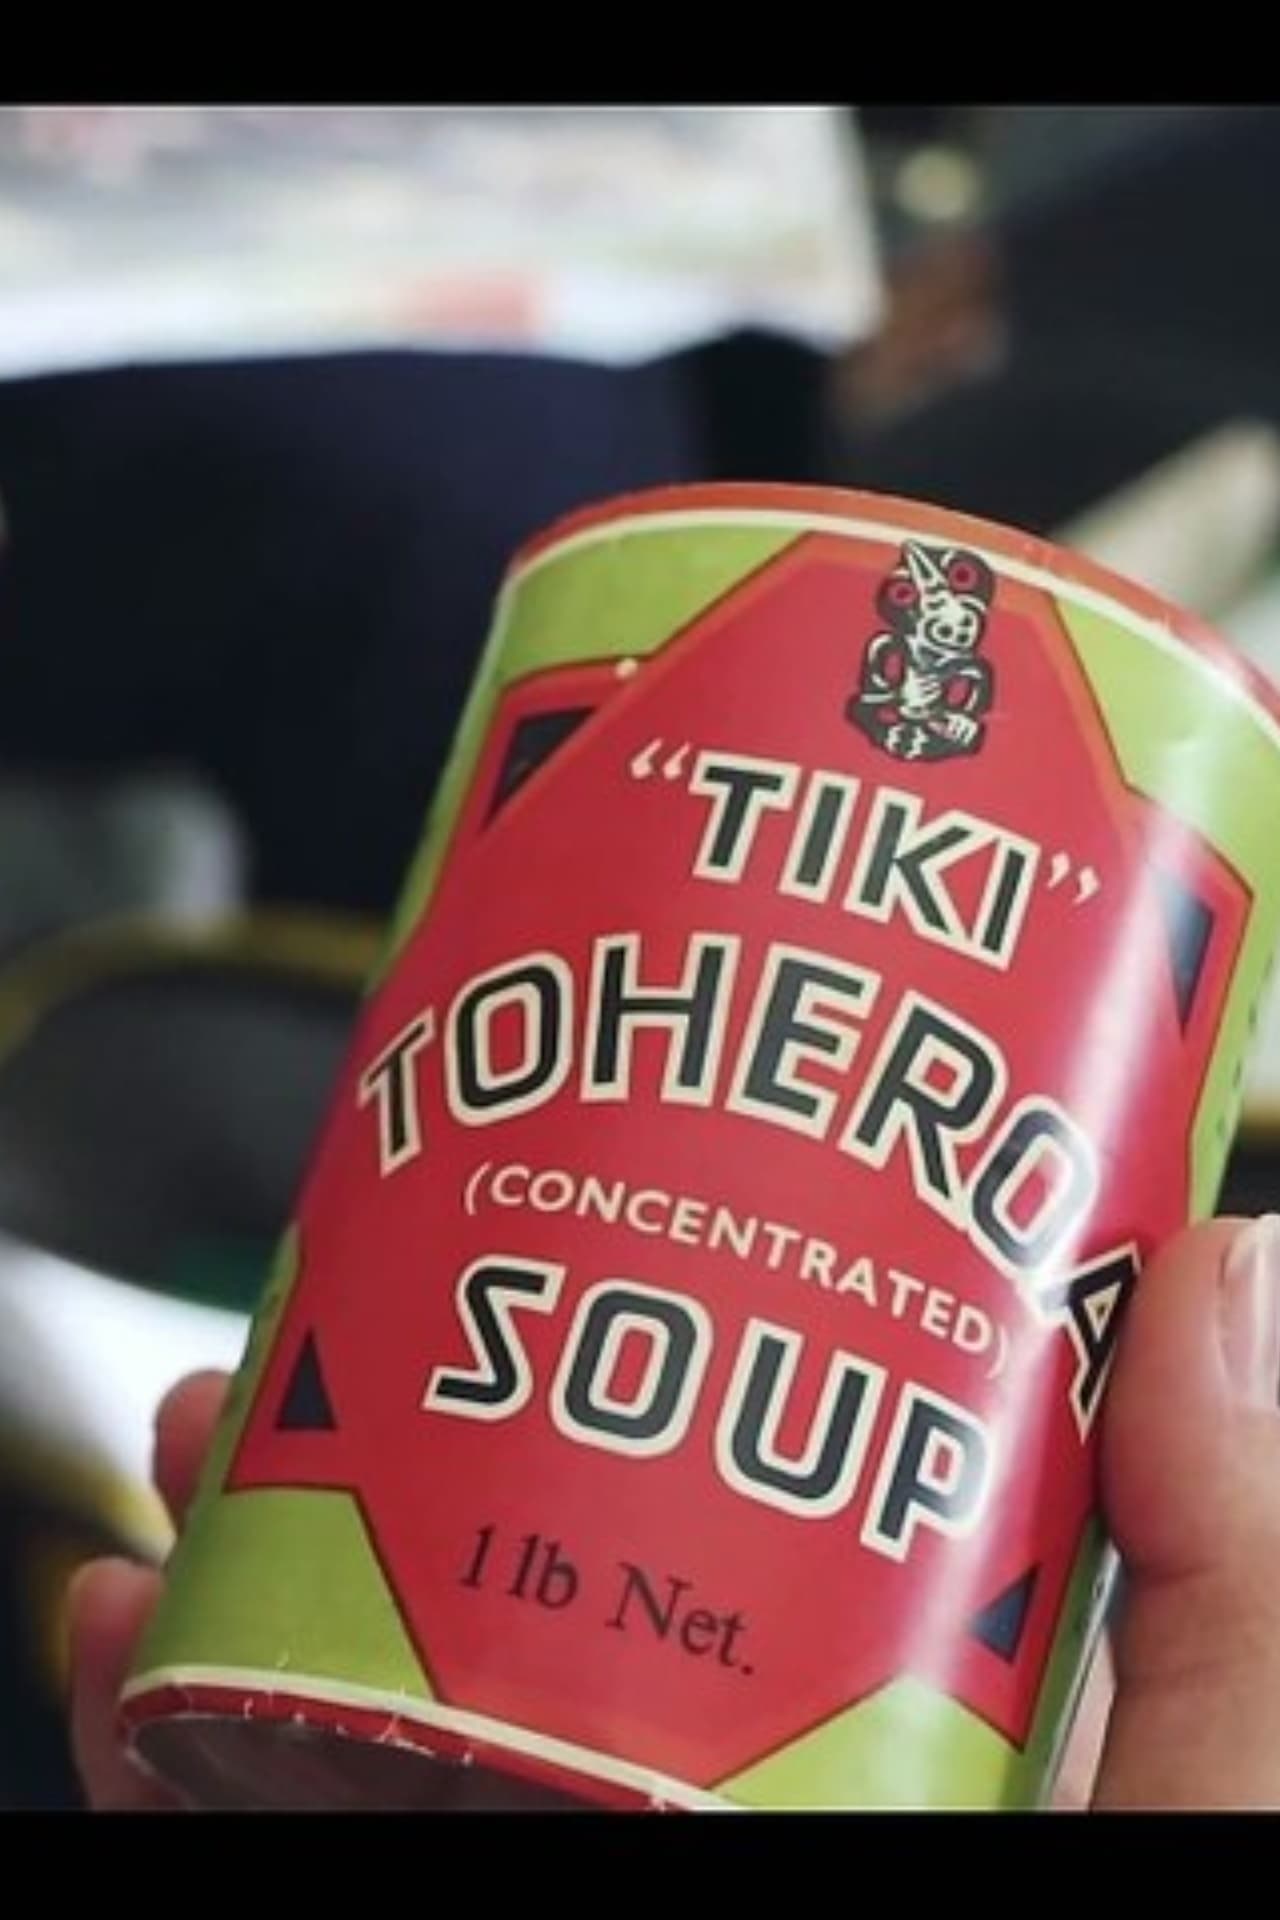 The Politics of Toheroa Soup